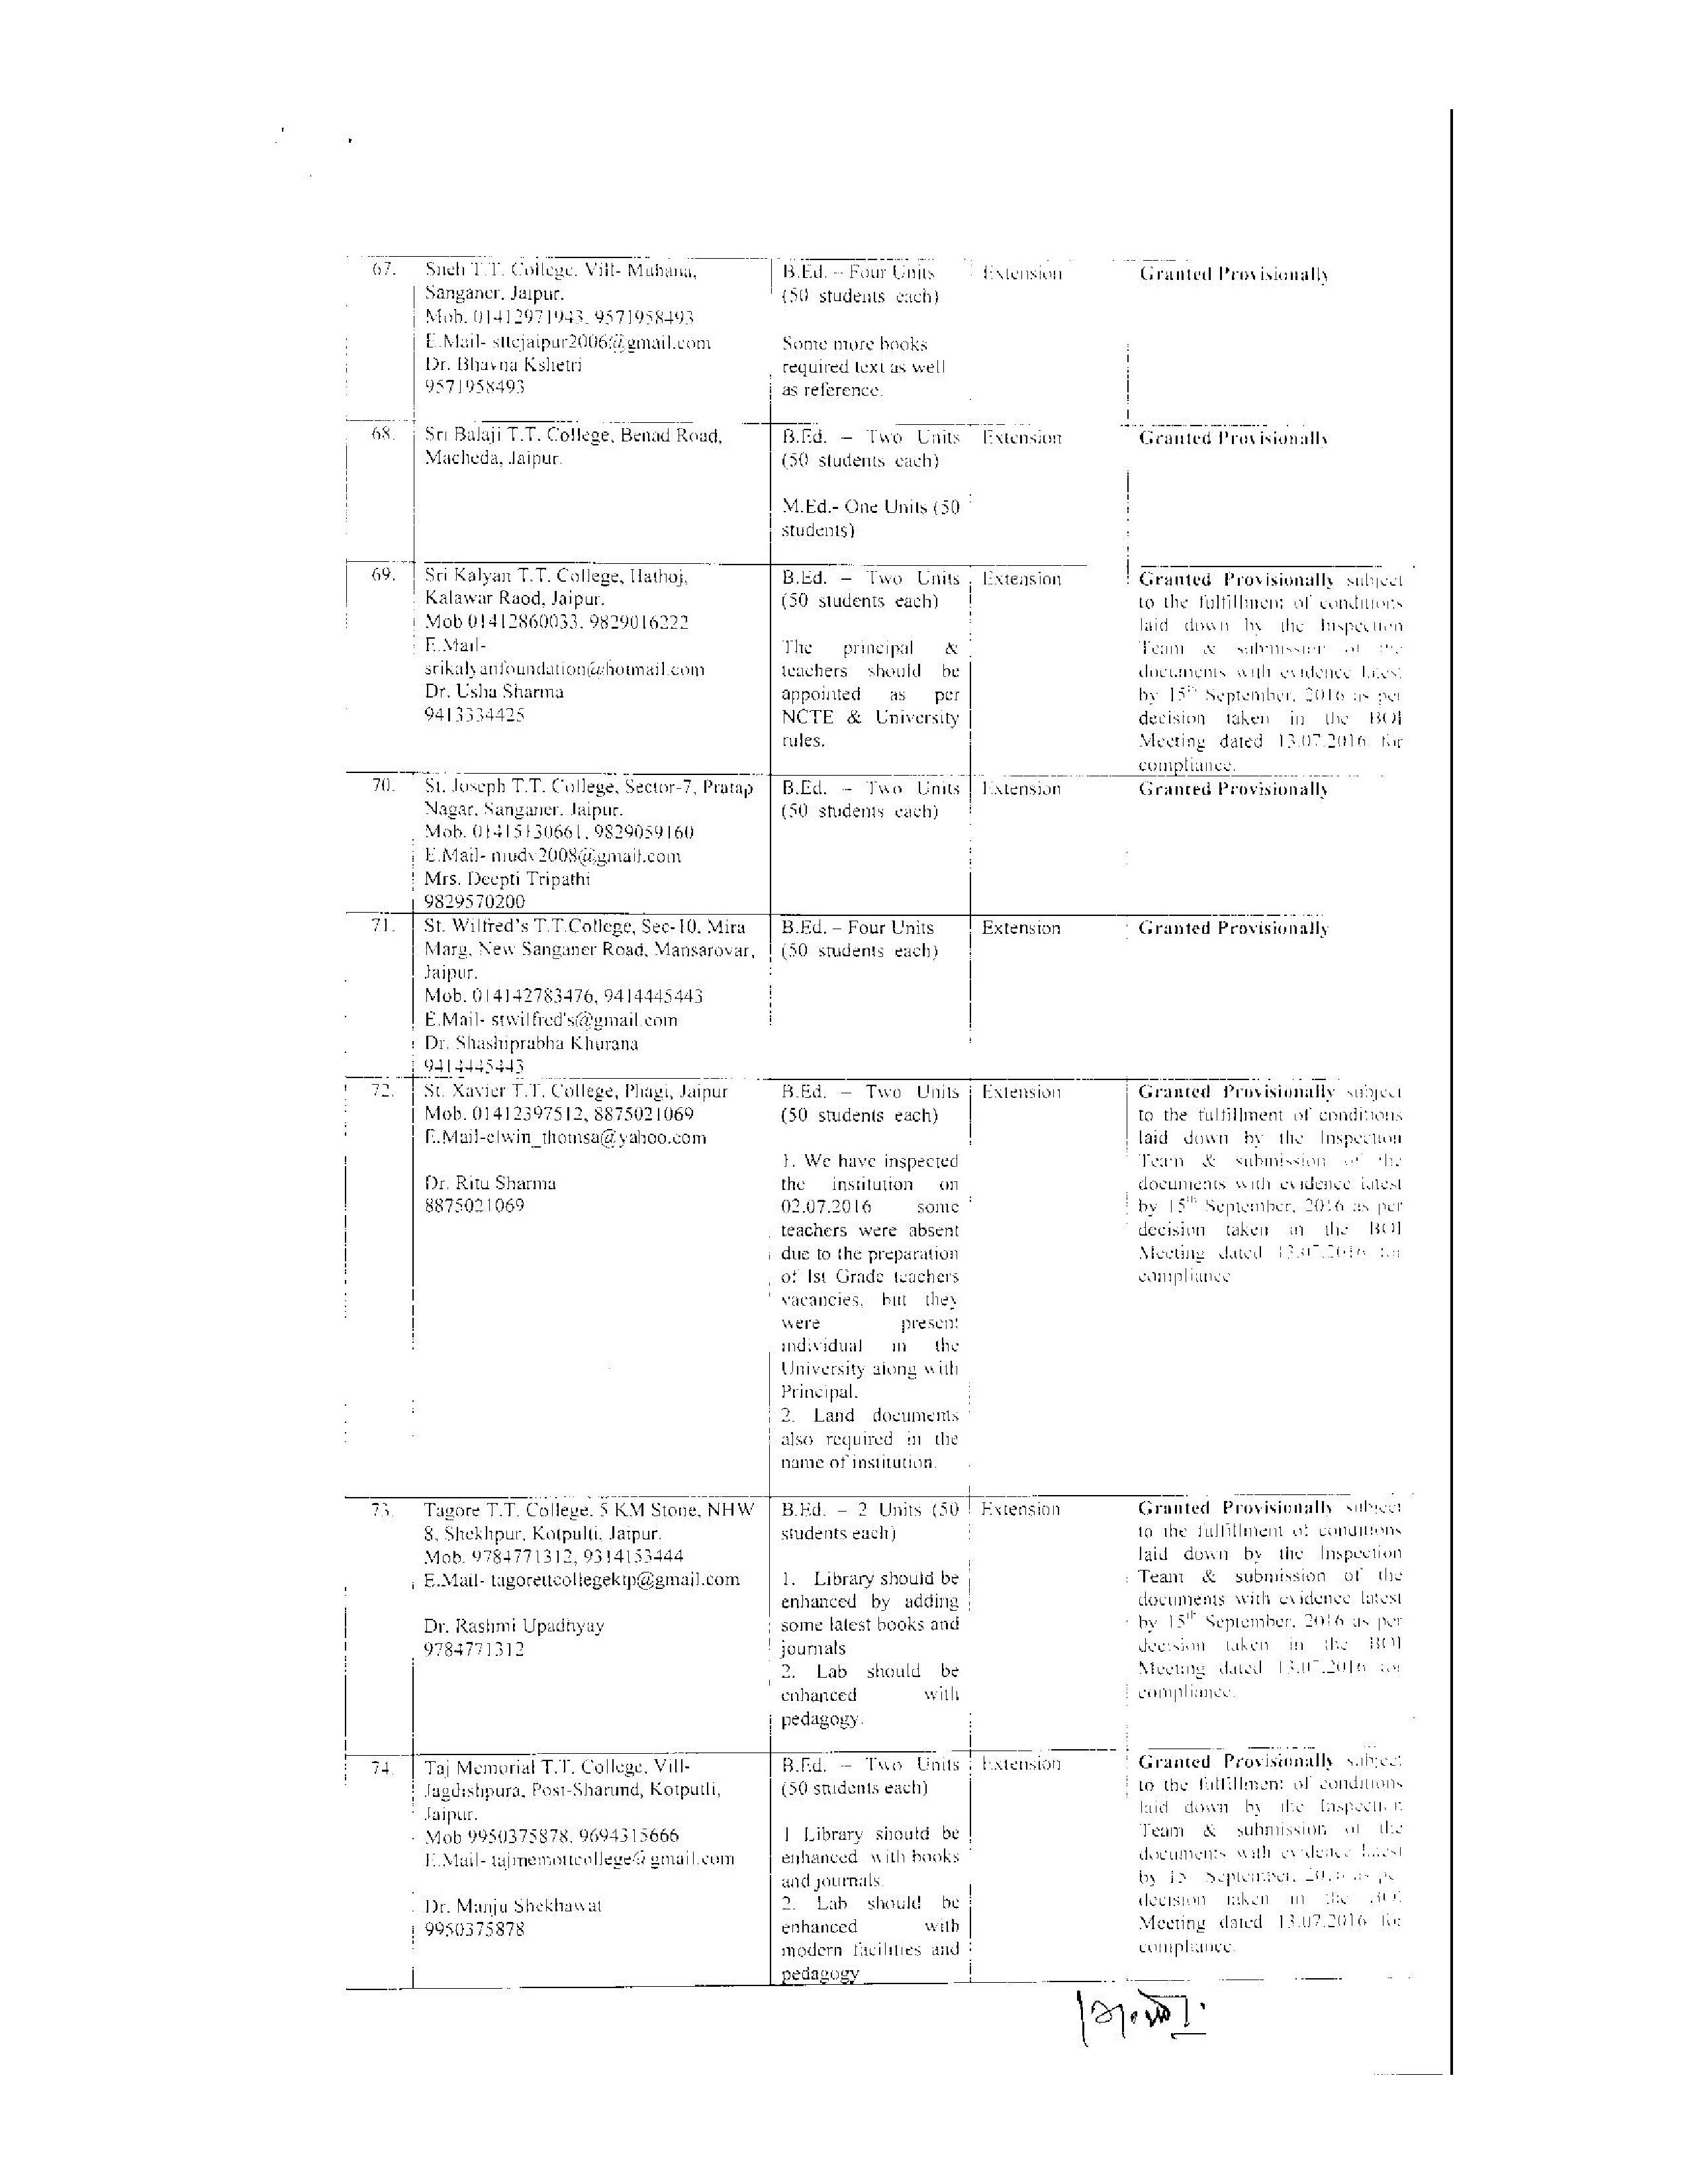 affiliation-rajasthan-university-page-002